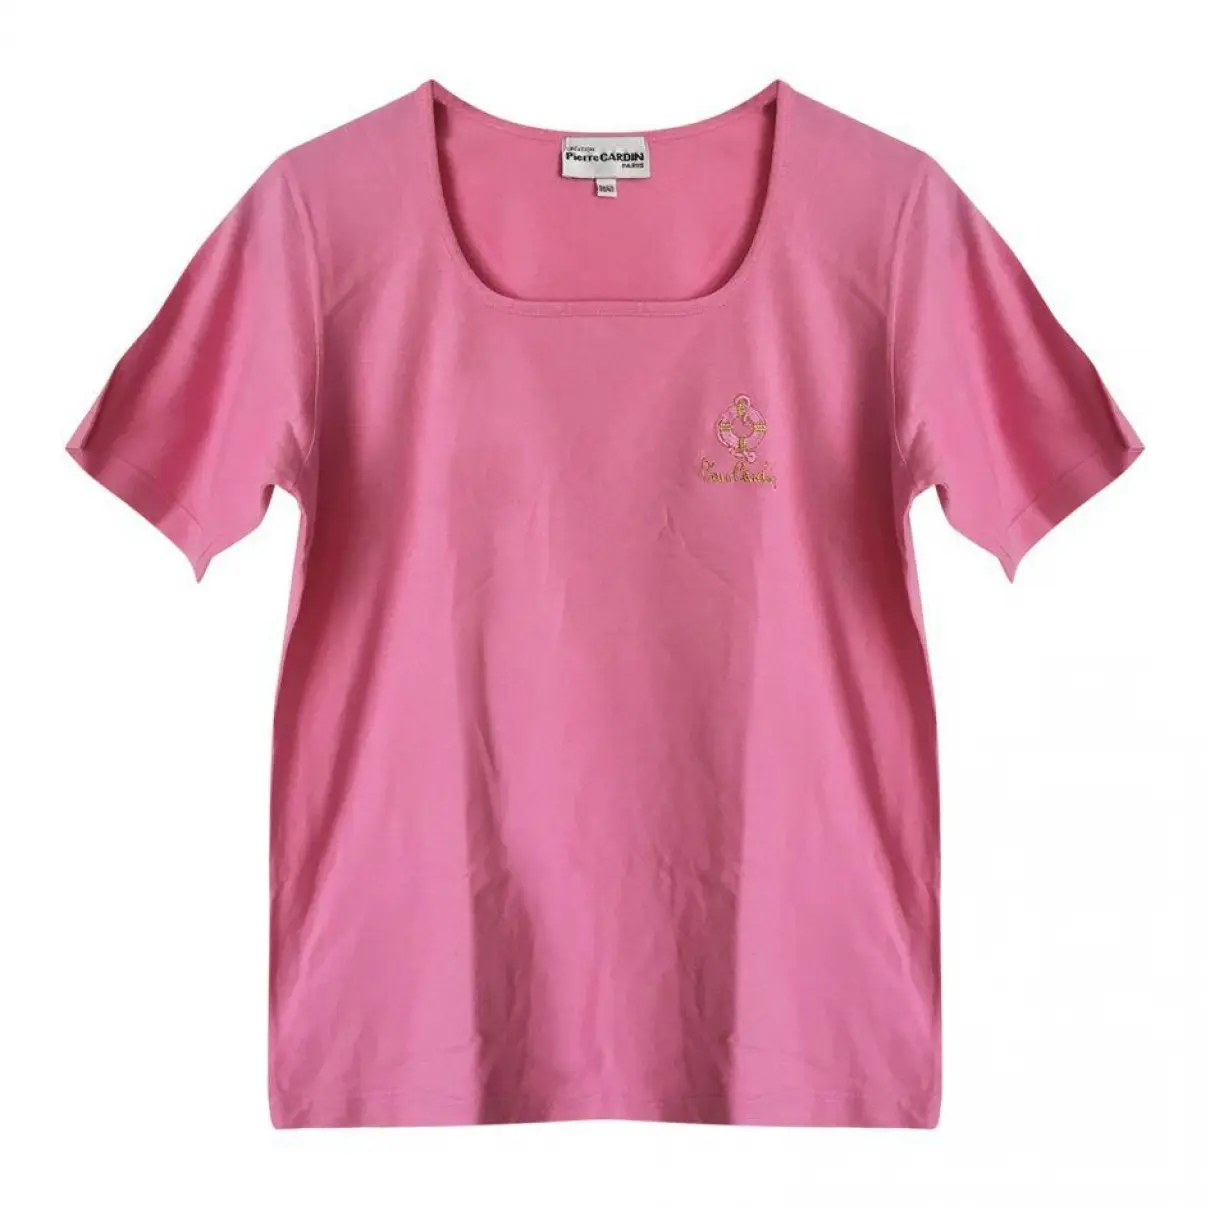 Pink Cotton Top Pierre Cardin - Vintage